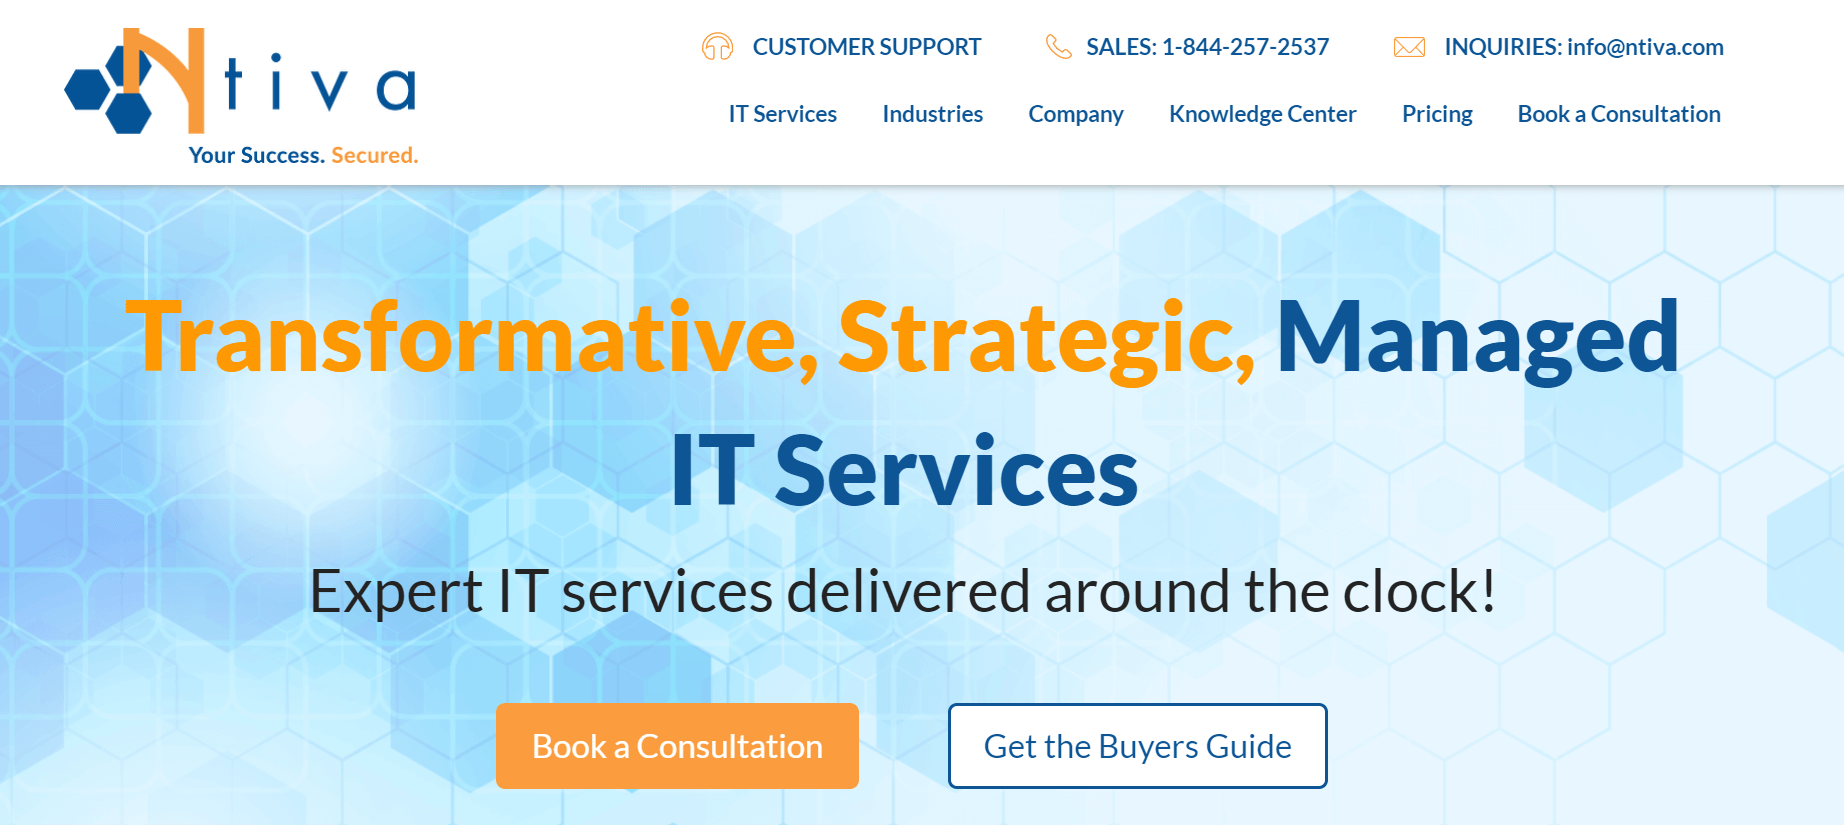 Ntiva homepage: Transformative, Strategic, Managed IT Services